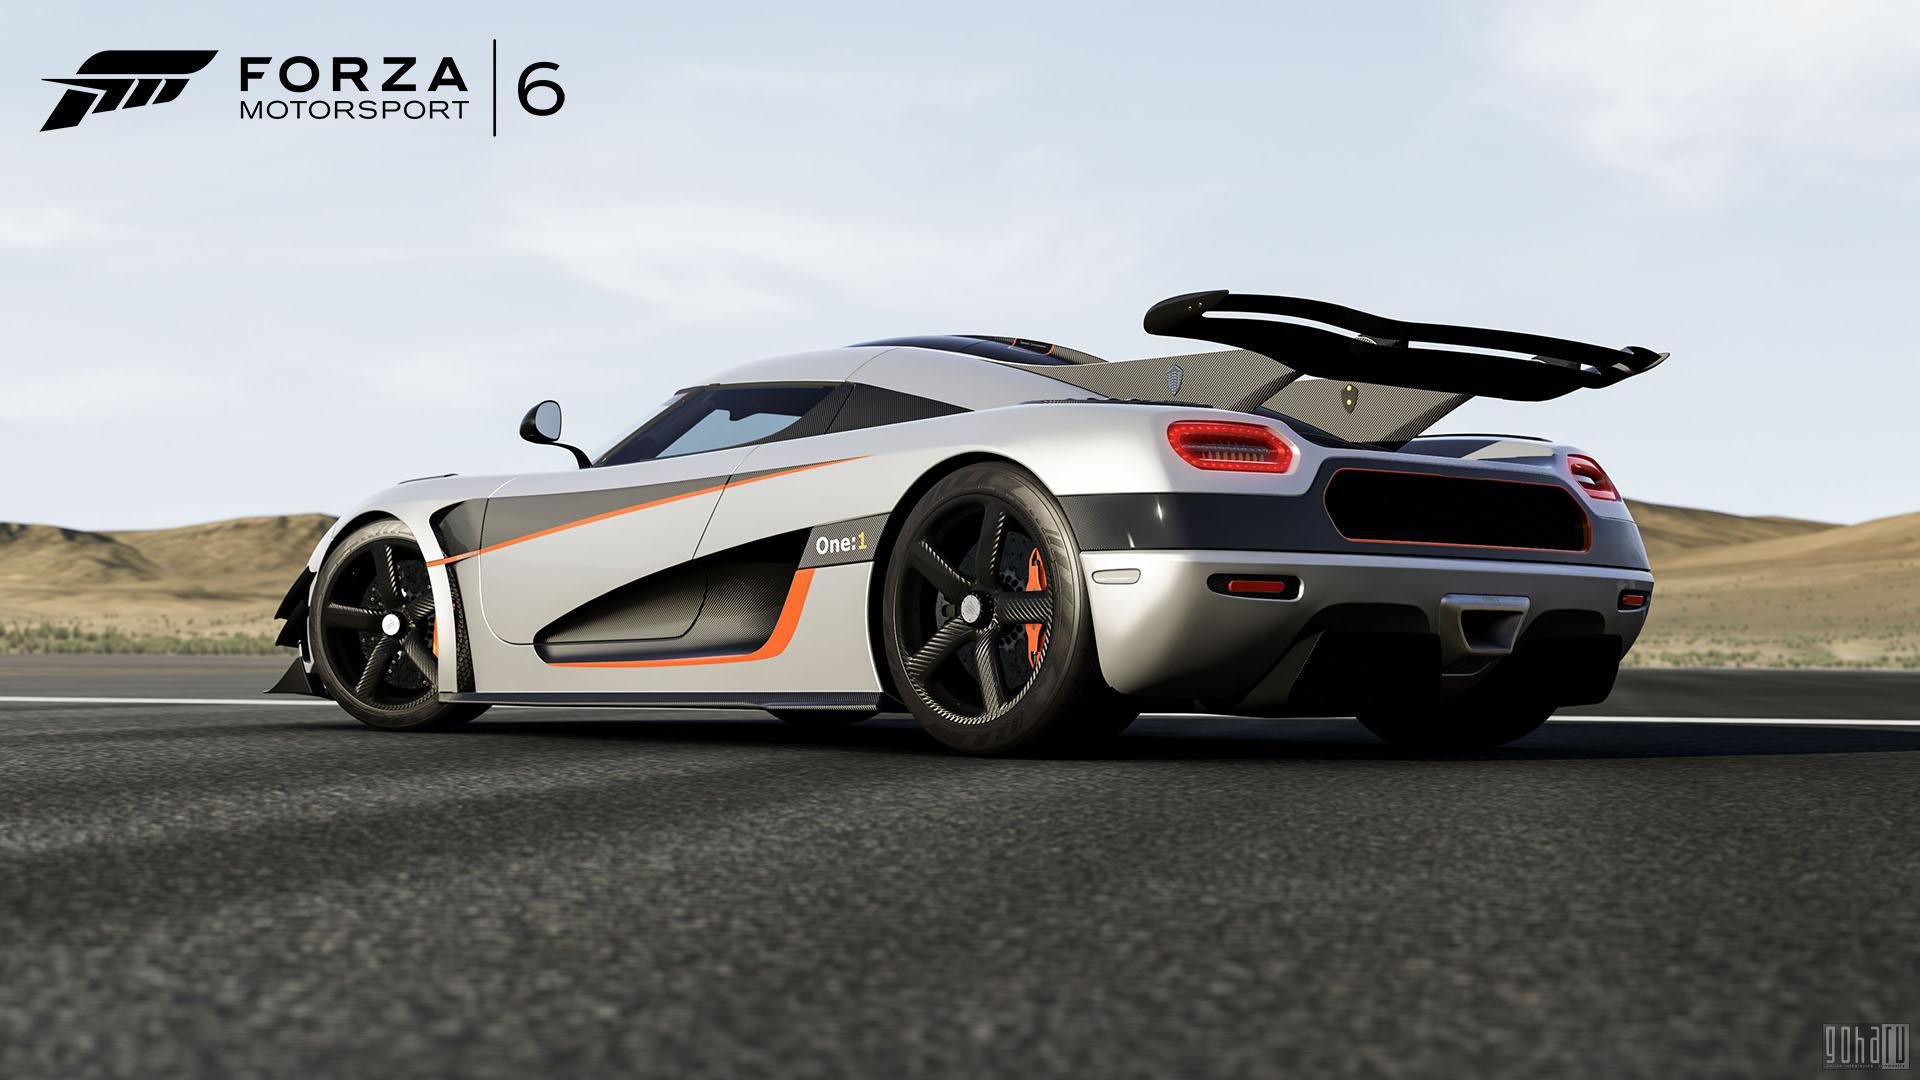 Forza Motorsport 6 Wallpapers Hd For Desktop Backgrounds